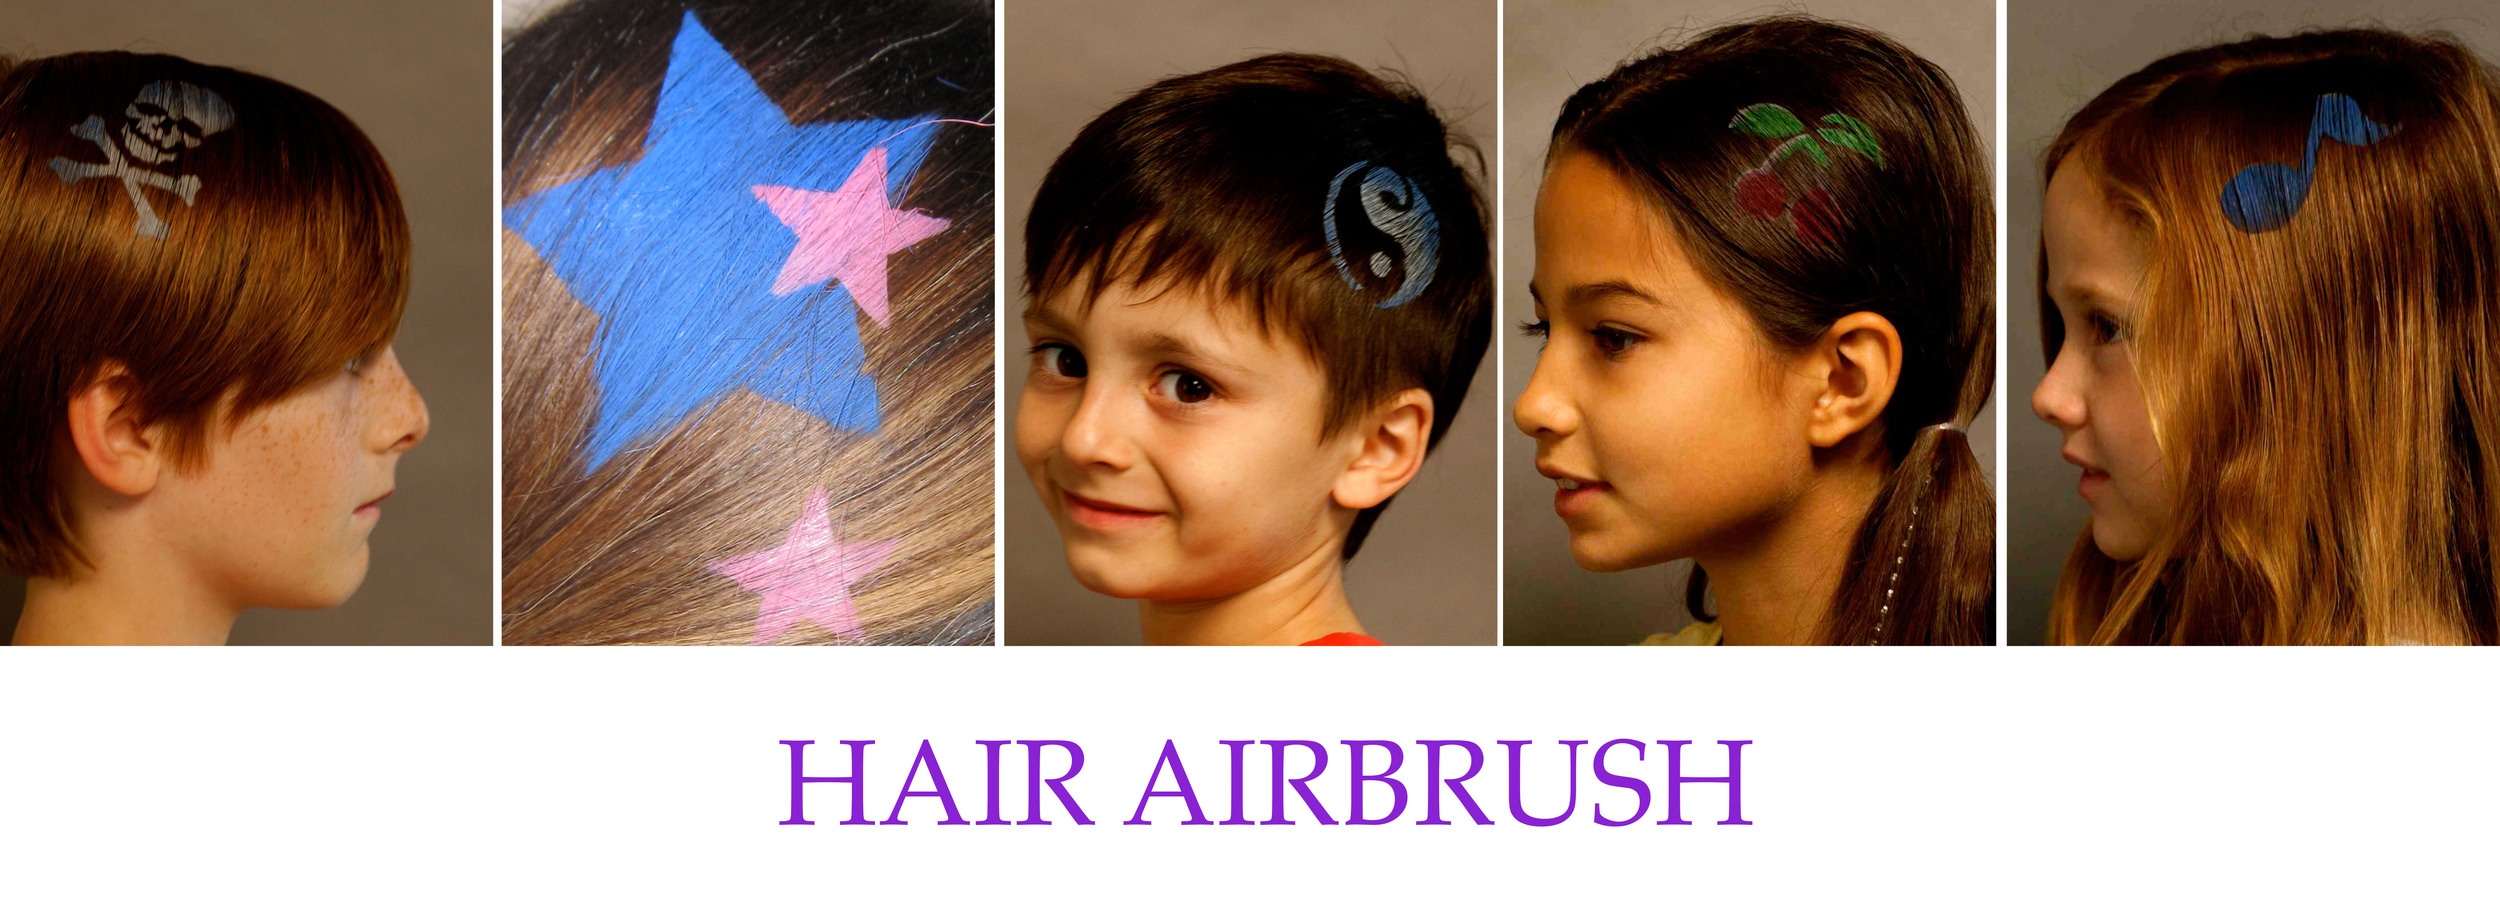 Hair Airbrush We Adorn You.jpg